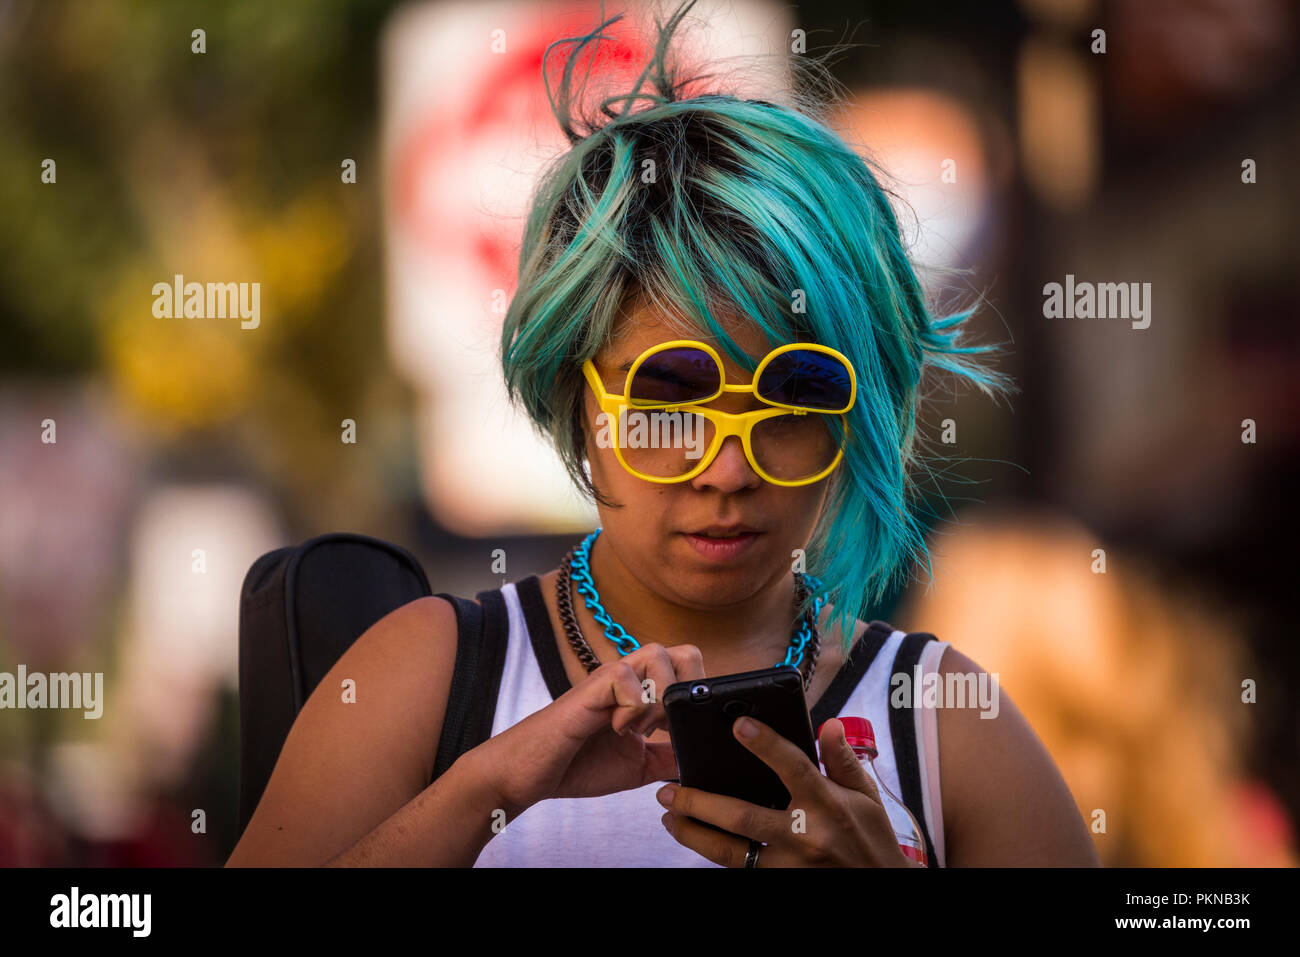 Woman with fuchsia hair wearing yellow sun glasses. Stock Photo